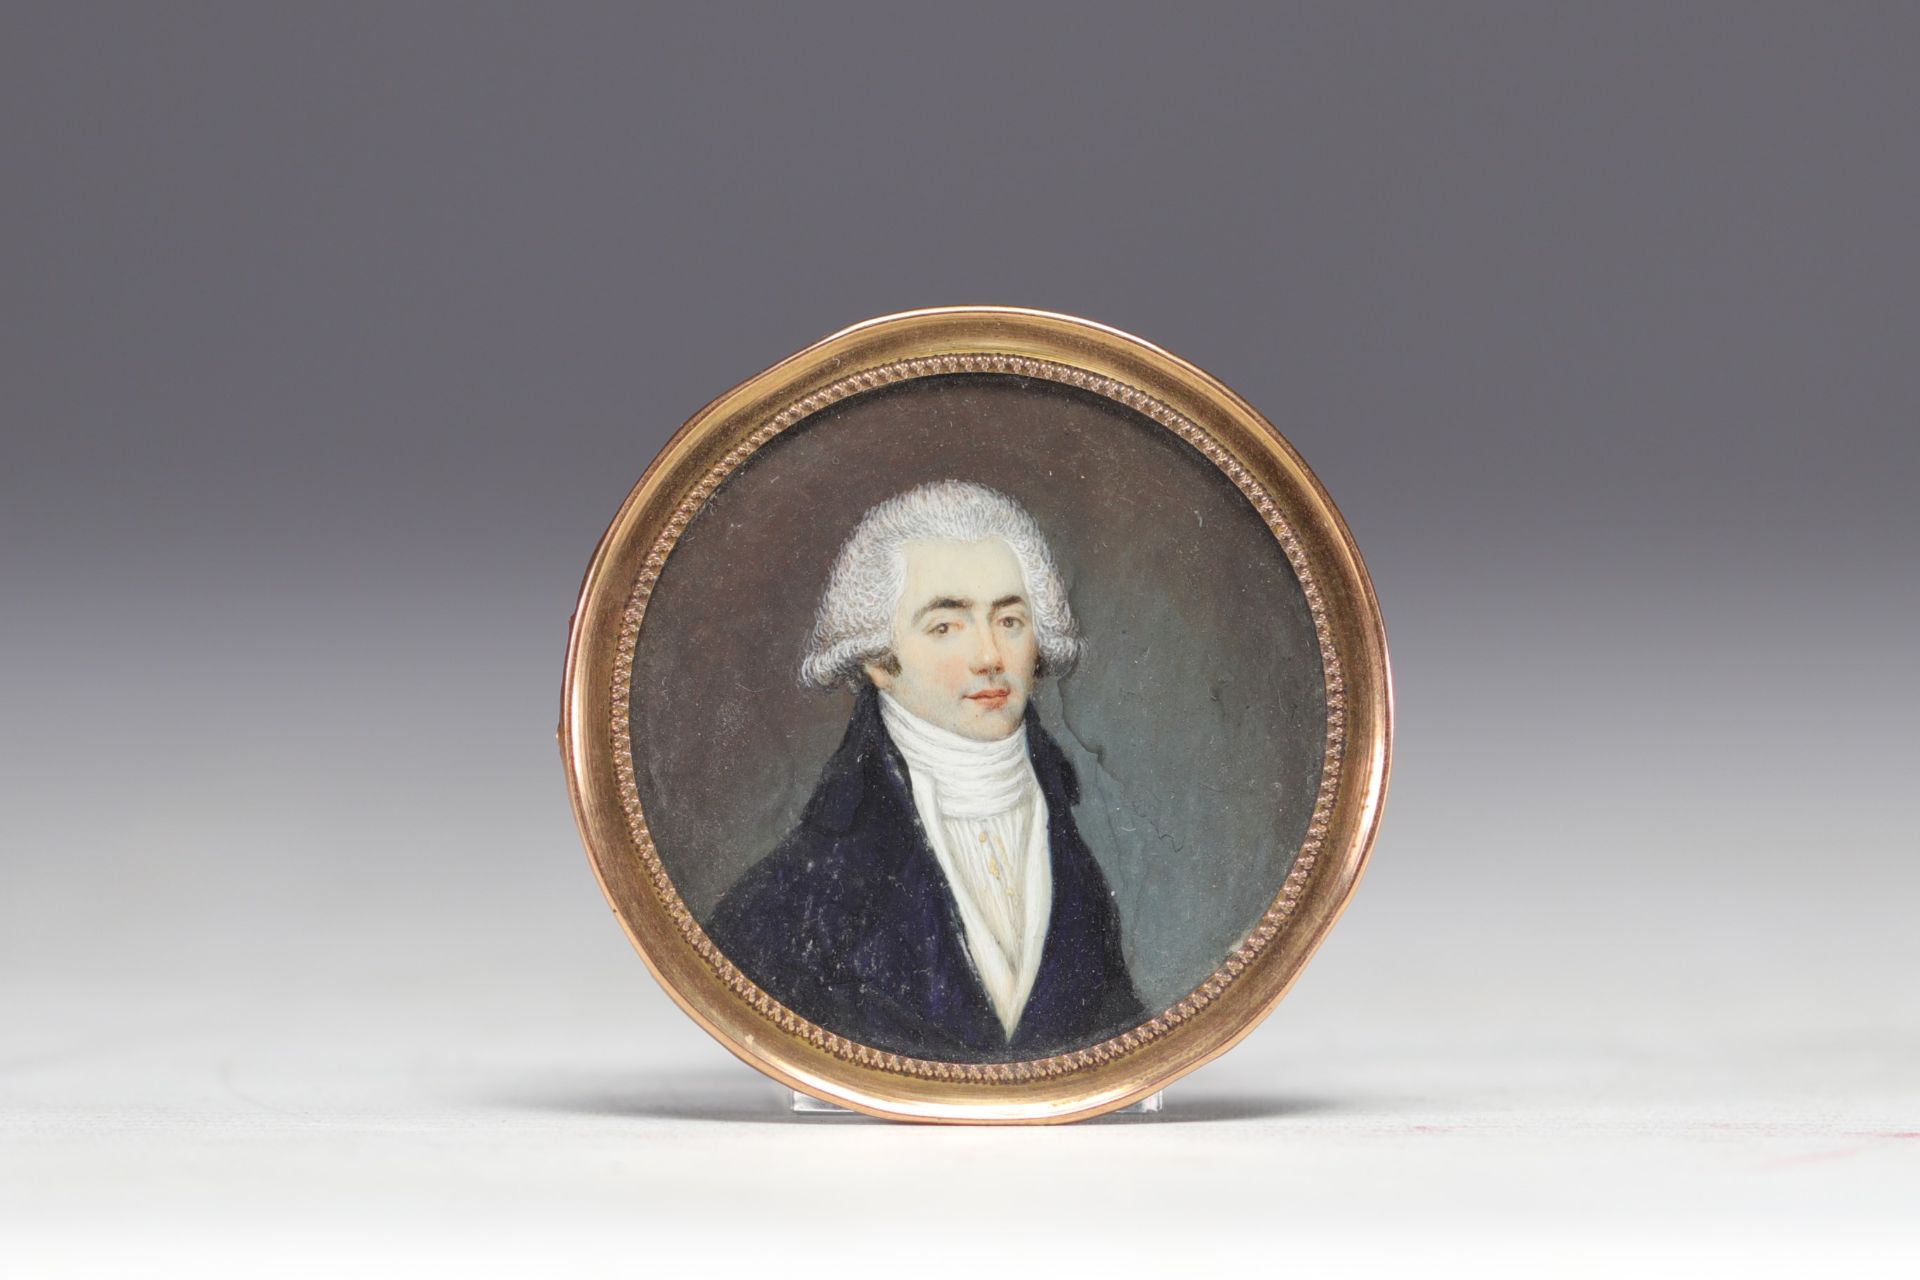 Miniature "Portrait of a Gentleman in a Black Coat" 18th-19th century.